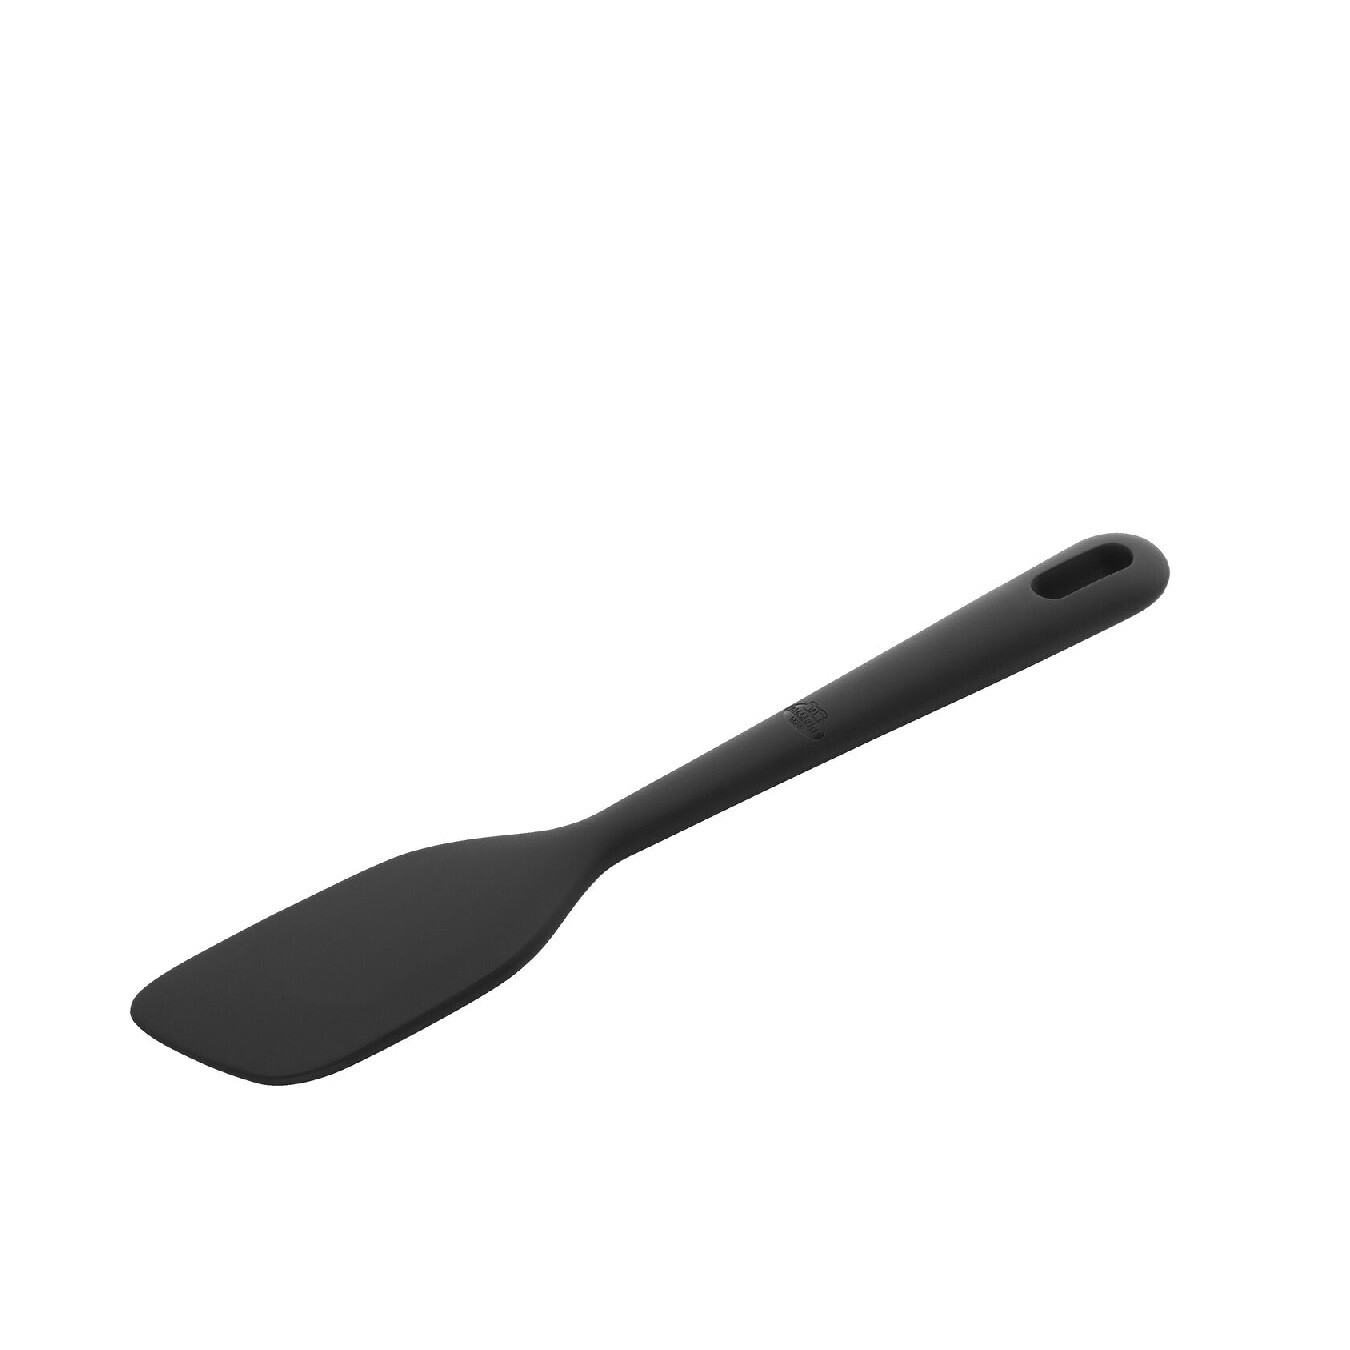 BALLARINI 'nero' pannenlikker 28cm silicone zwart PROMO 9,95-2,00